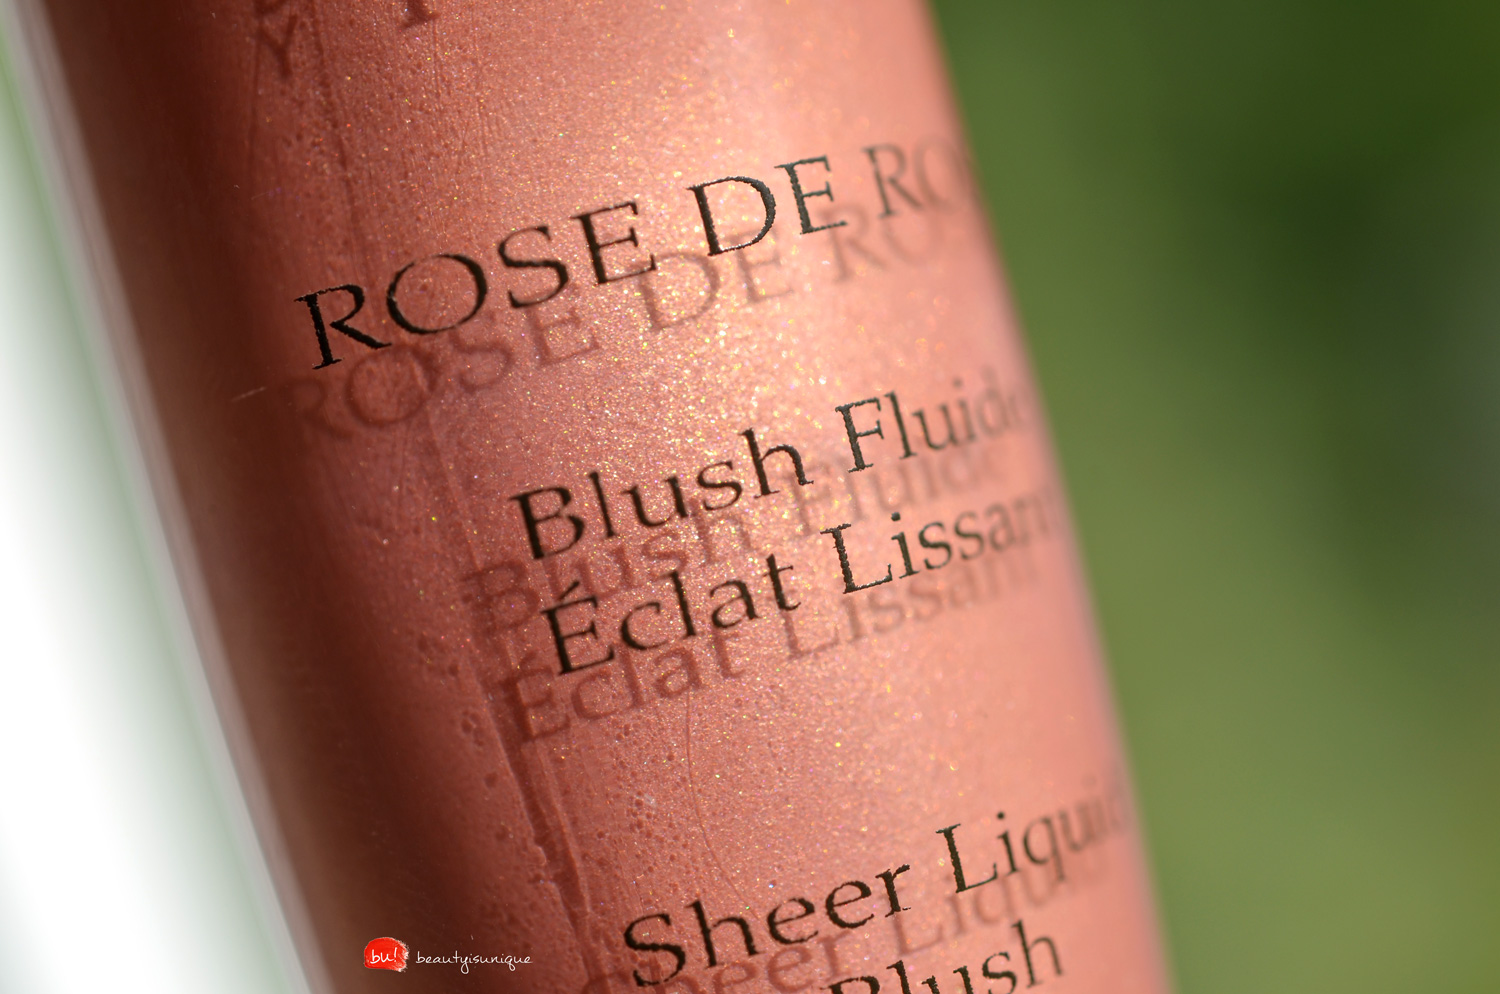 by-terry-rose-de-rose-sheer-liquid-blush-corail-rose